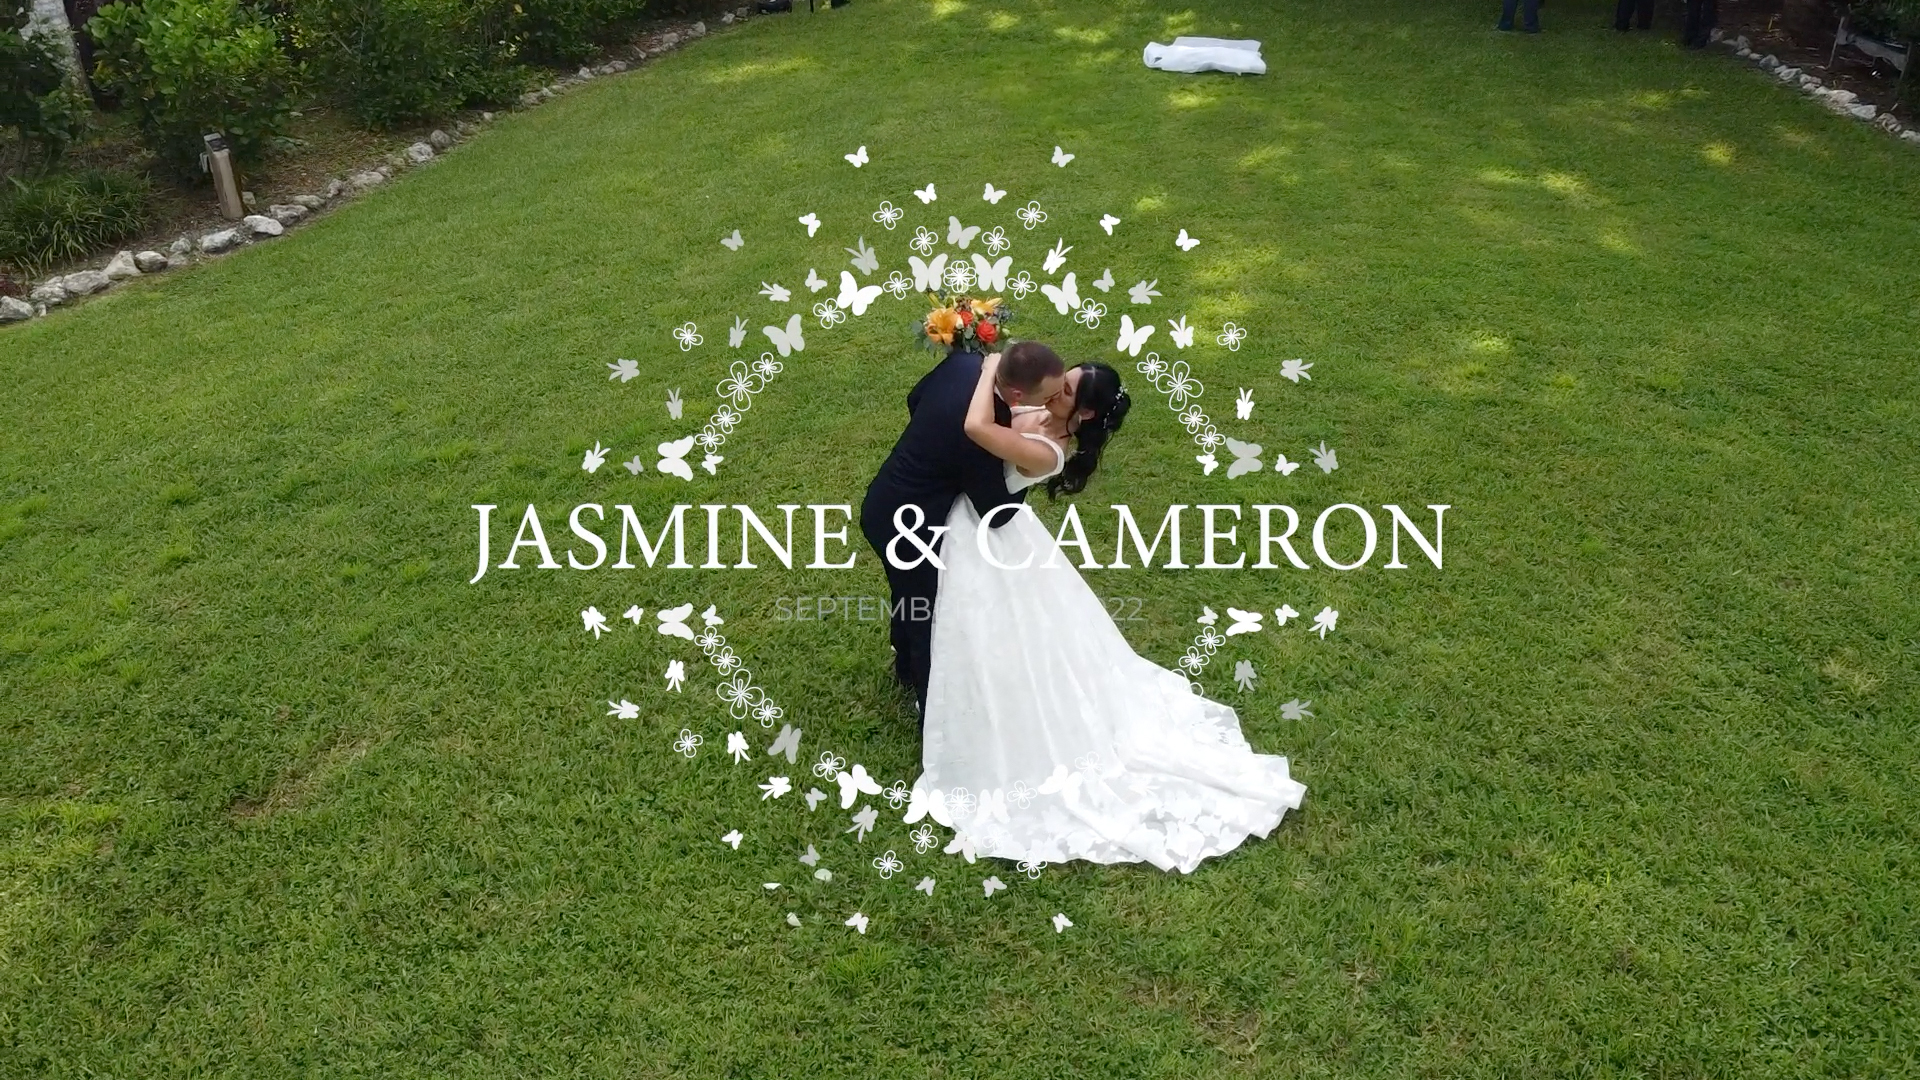 Jasmine & Cameron Wedding – trailer